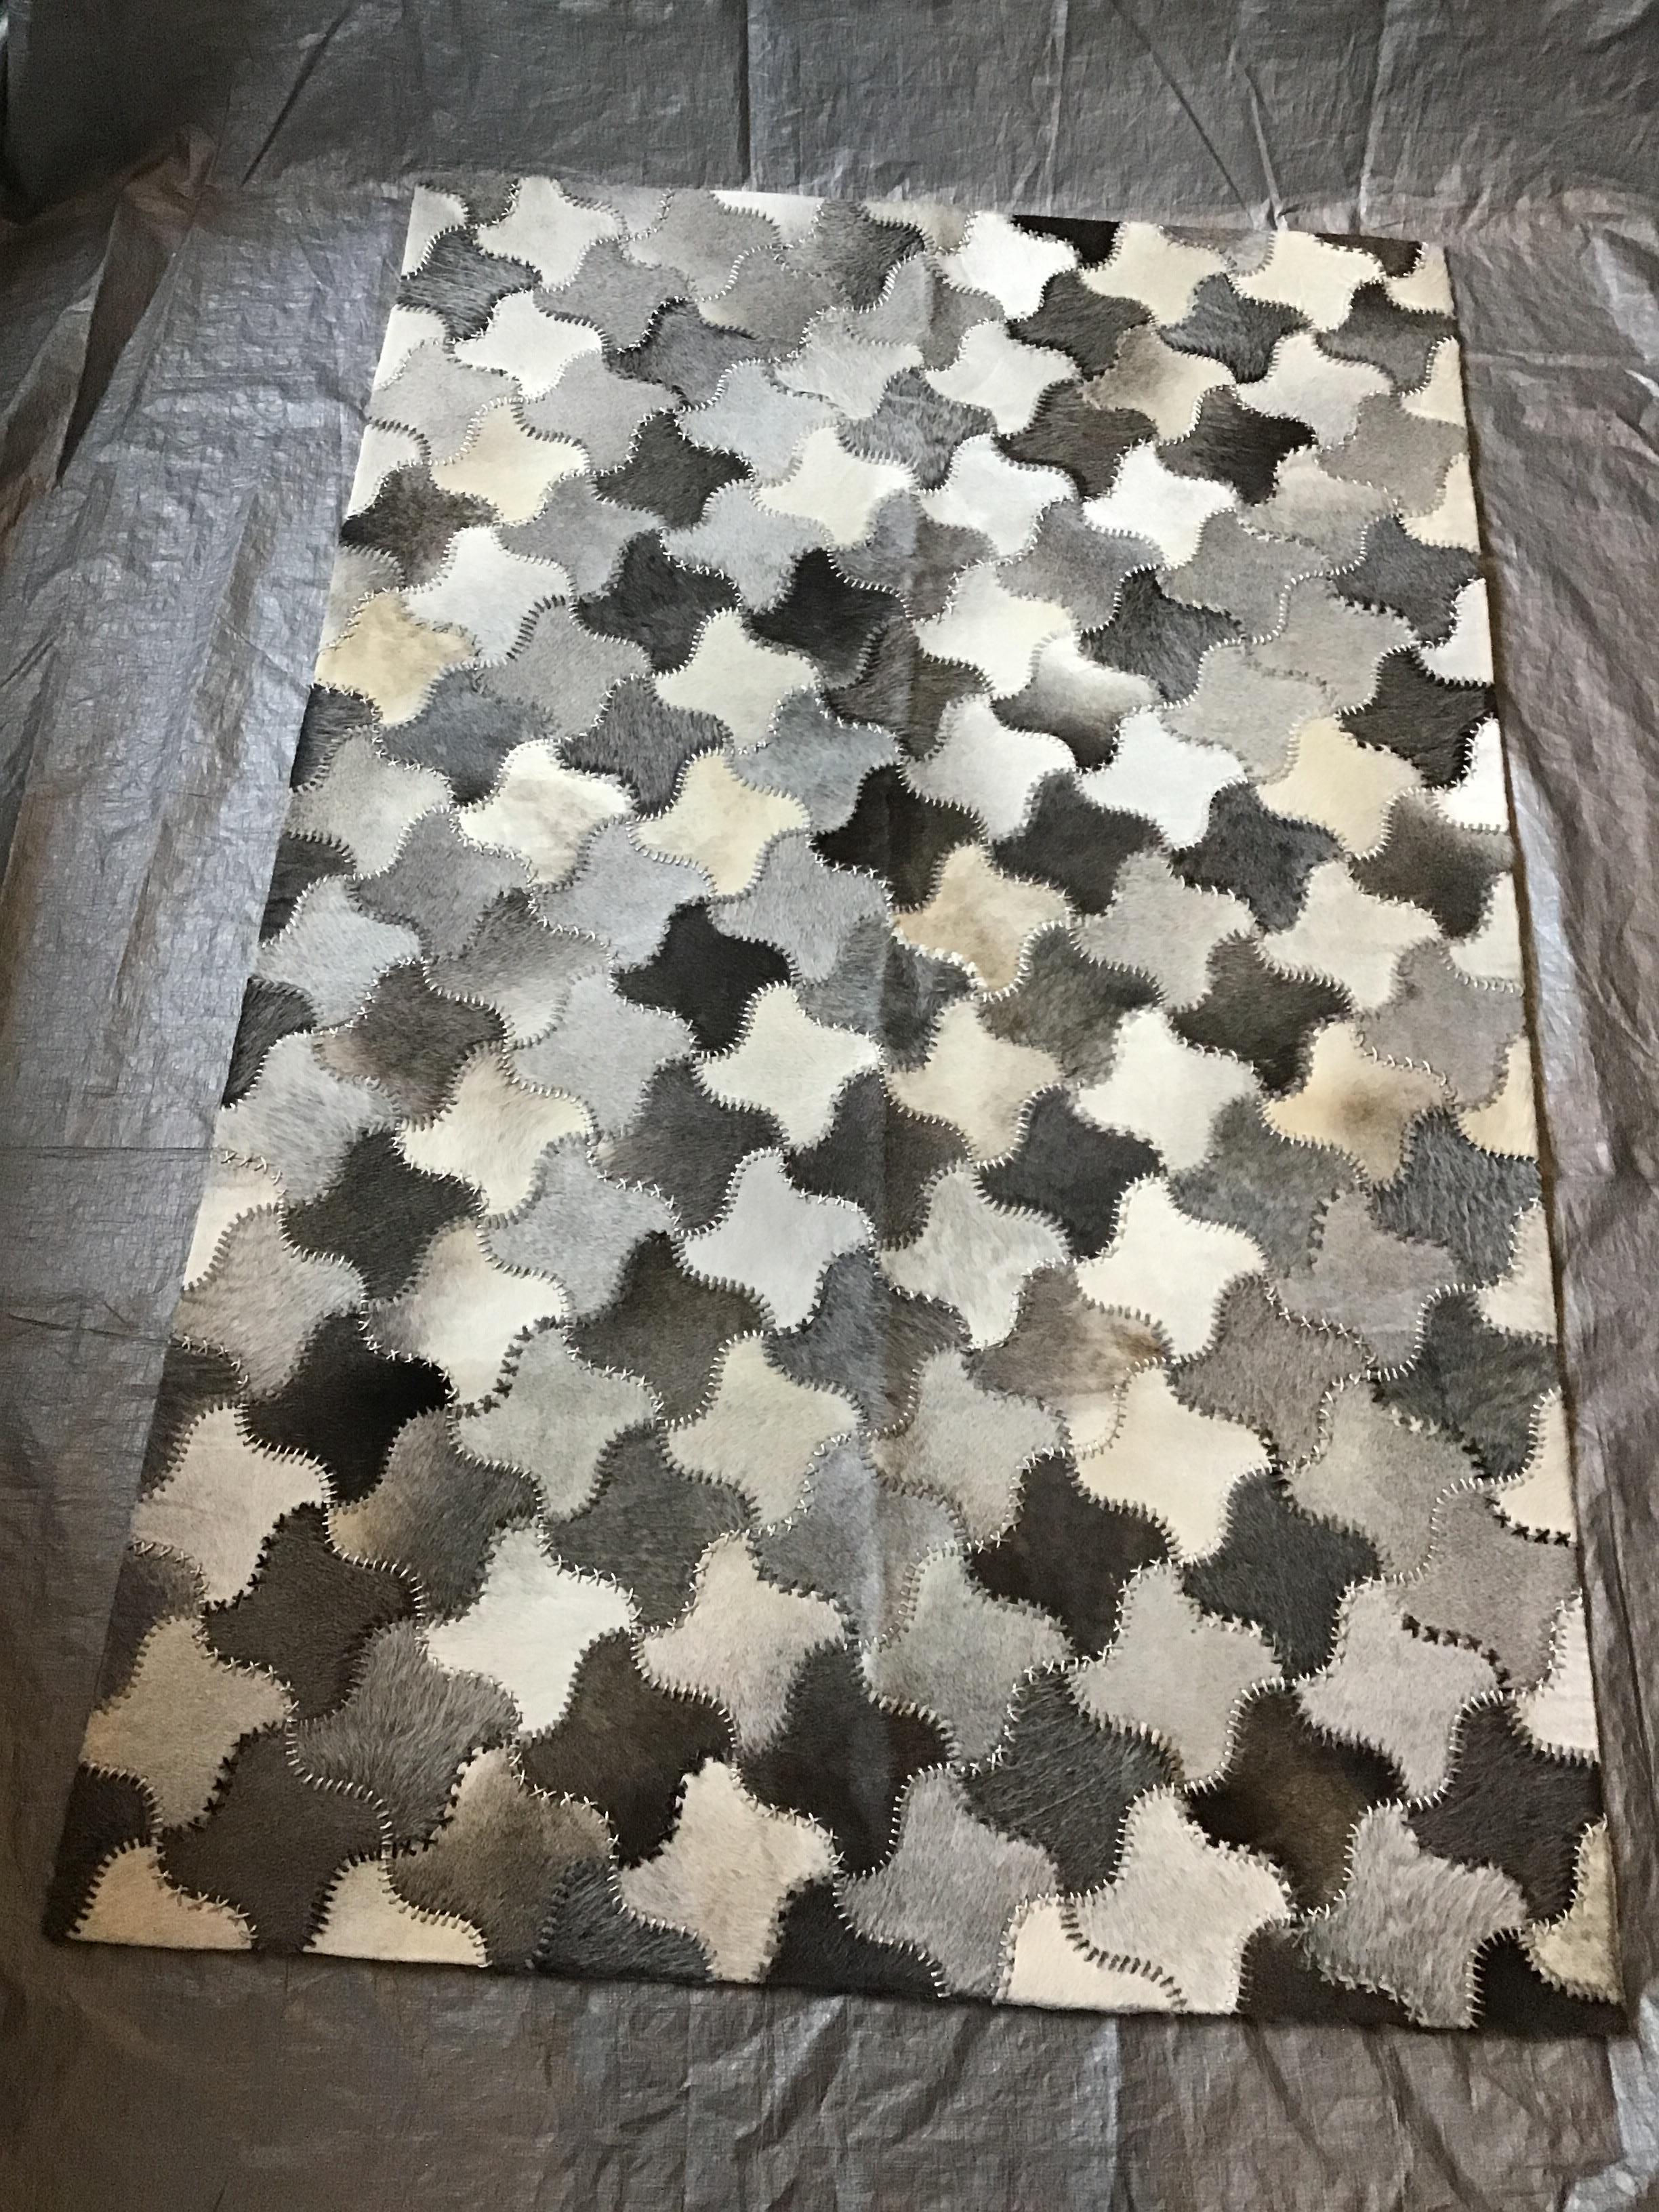 Castelluxe 5 x 8 Stardust design grey, beige, cream, hair on hide rug. Never used.